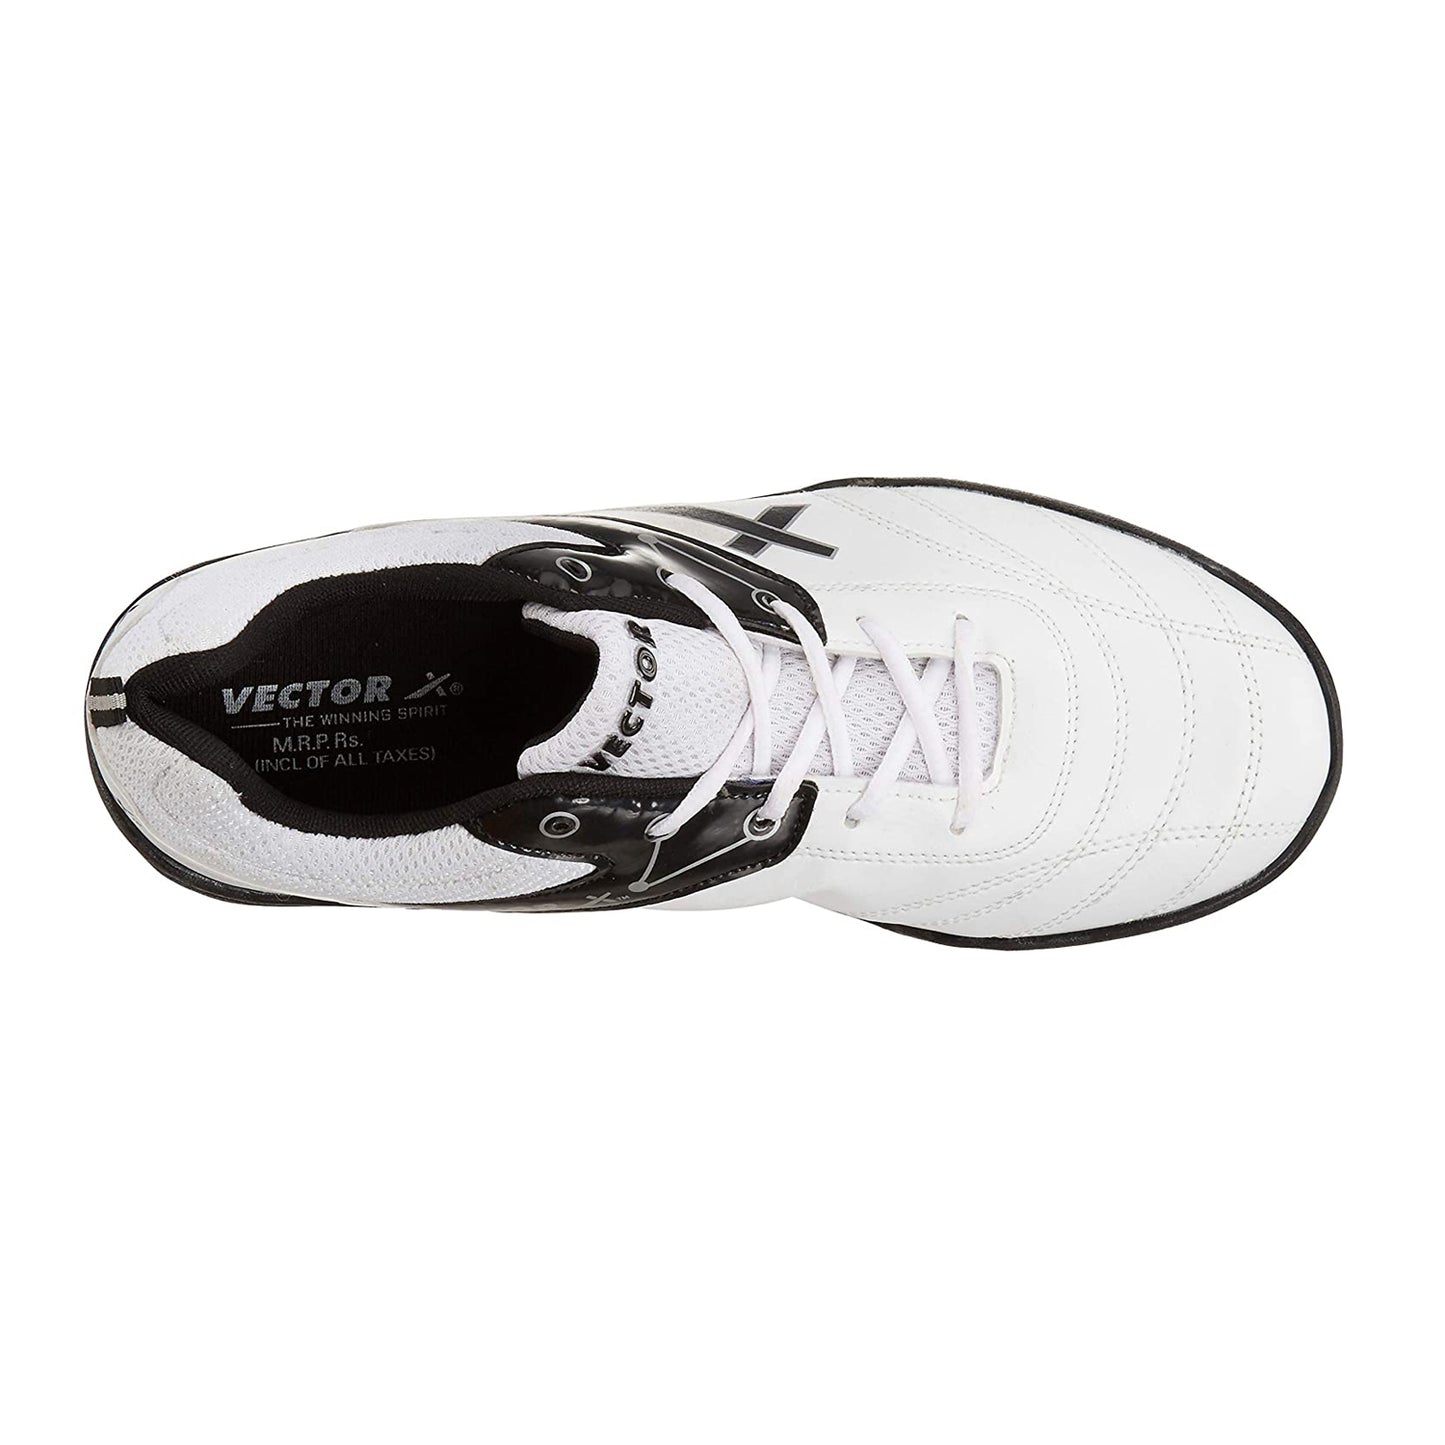 Vector X Blaster Cricket Shoes for Men, White/Black - Best Price online Prokicksports.com